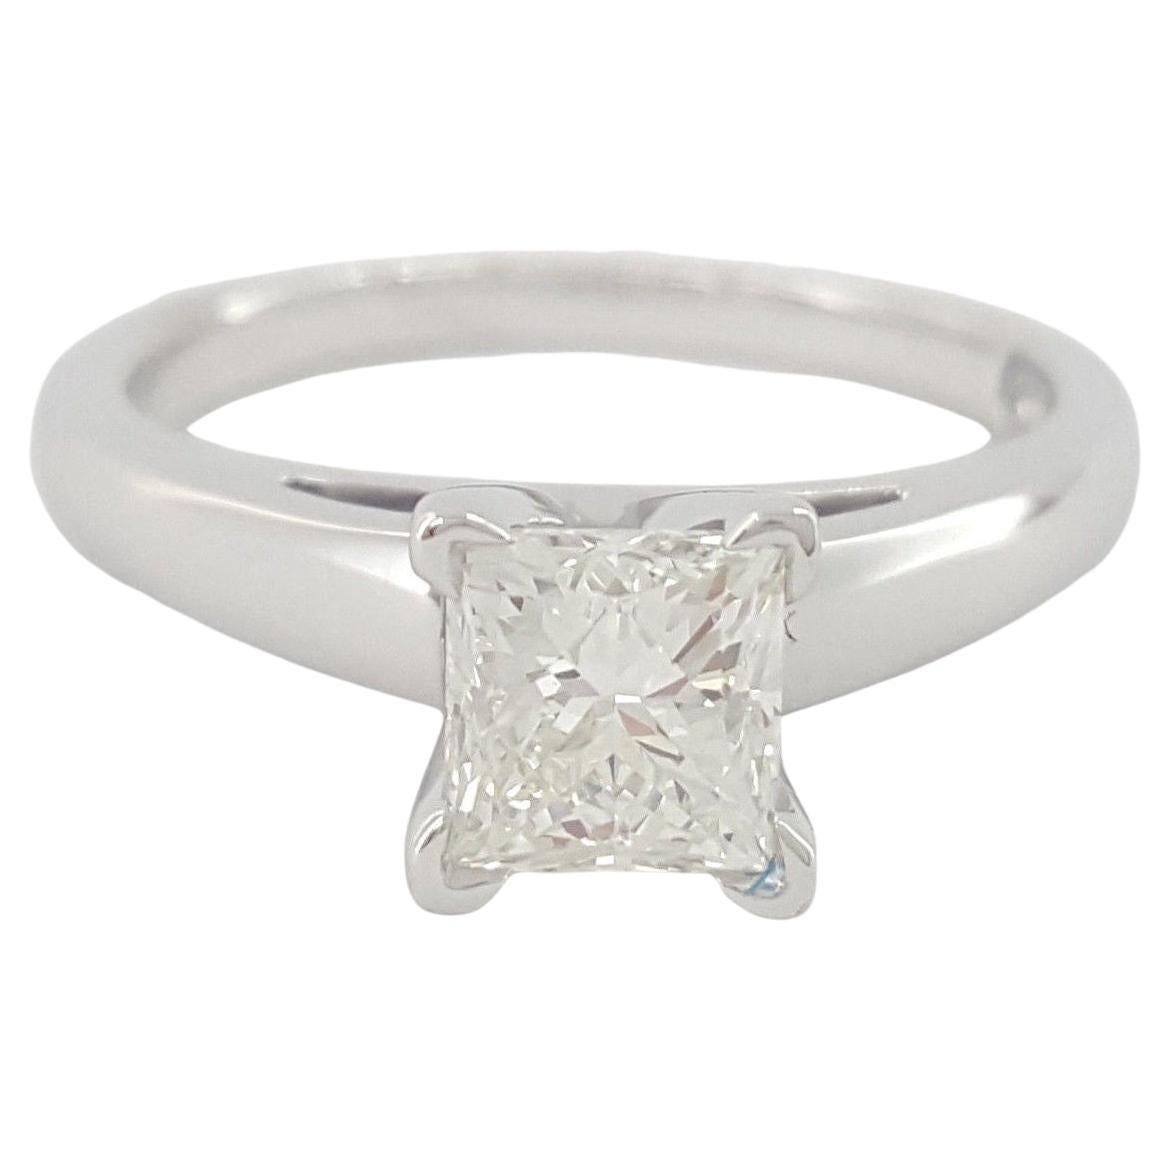 The Leo Diamond 1 Carat Princess Brilliant Cut Diamond Platinum Ring